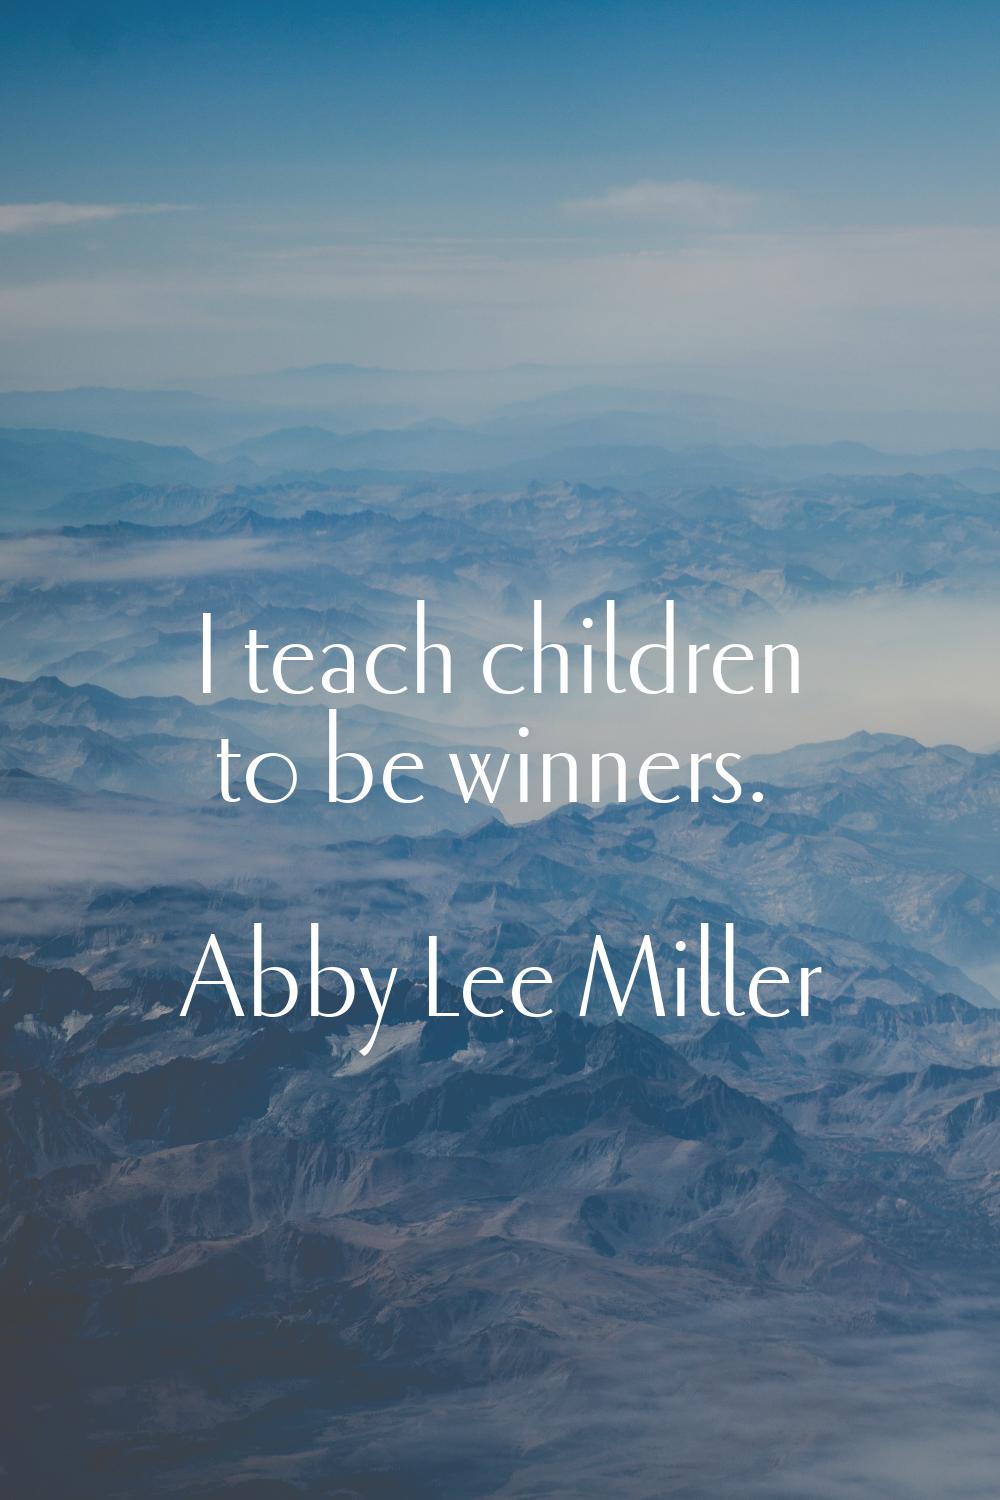 I teach children to be winners.